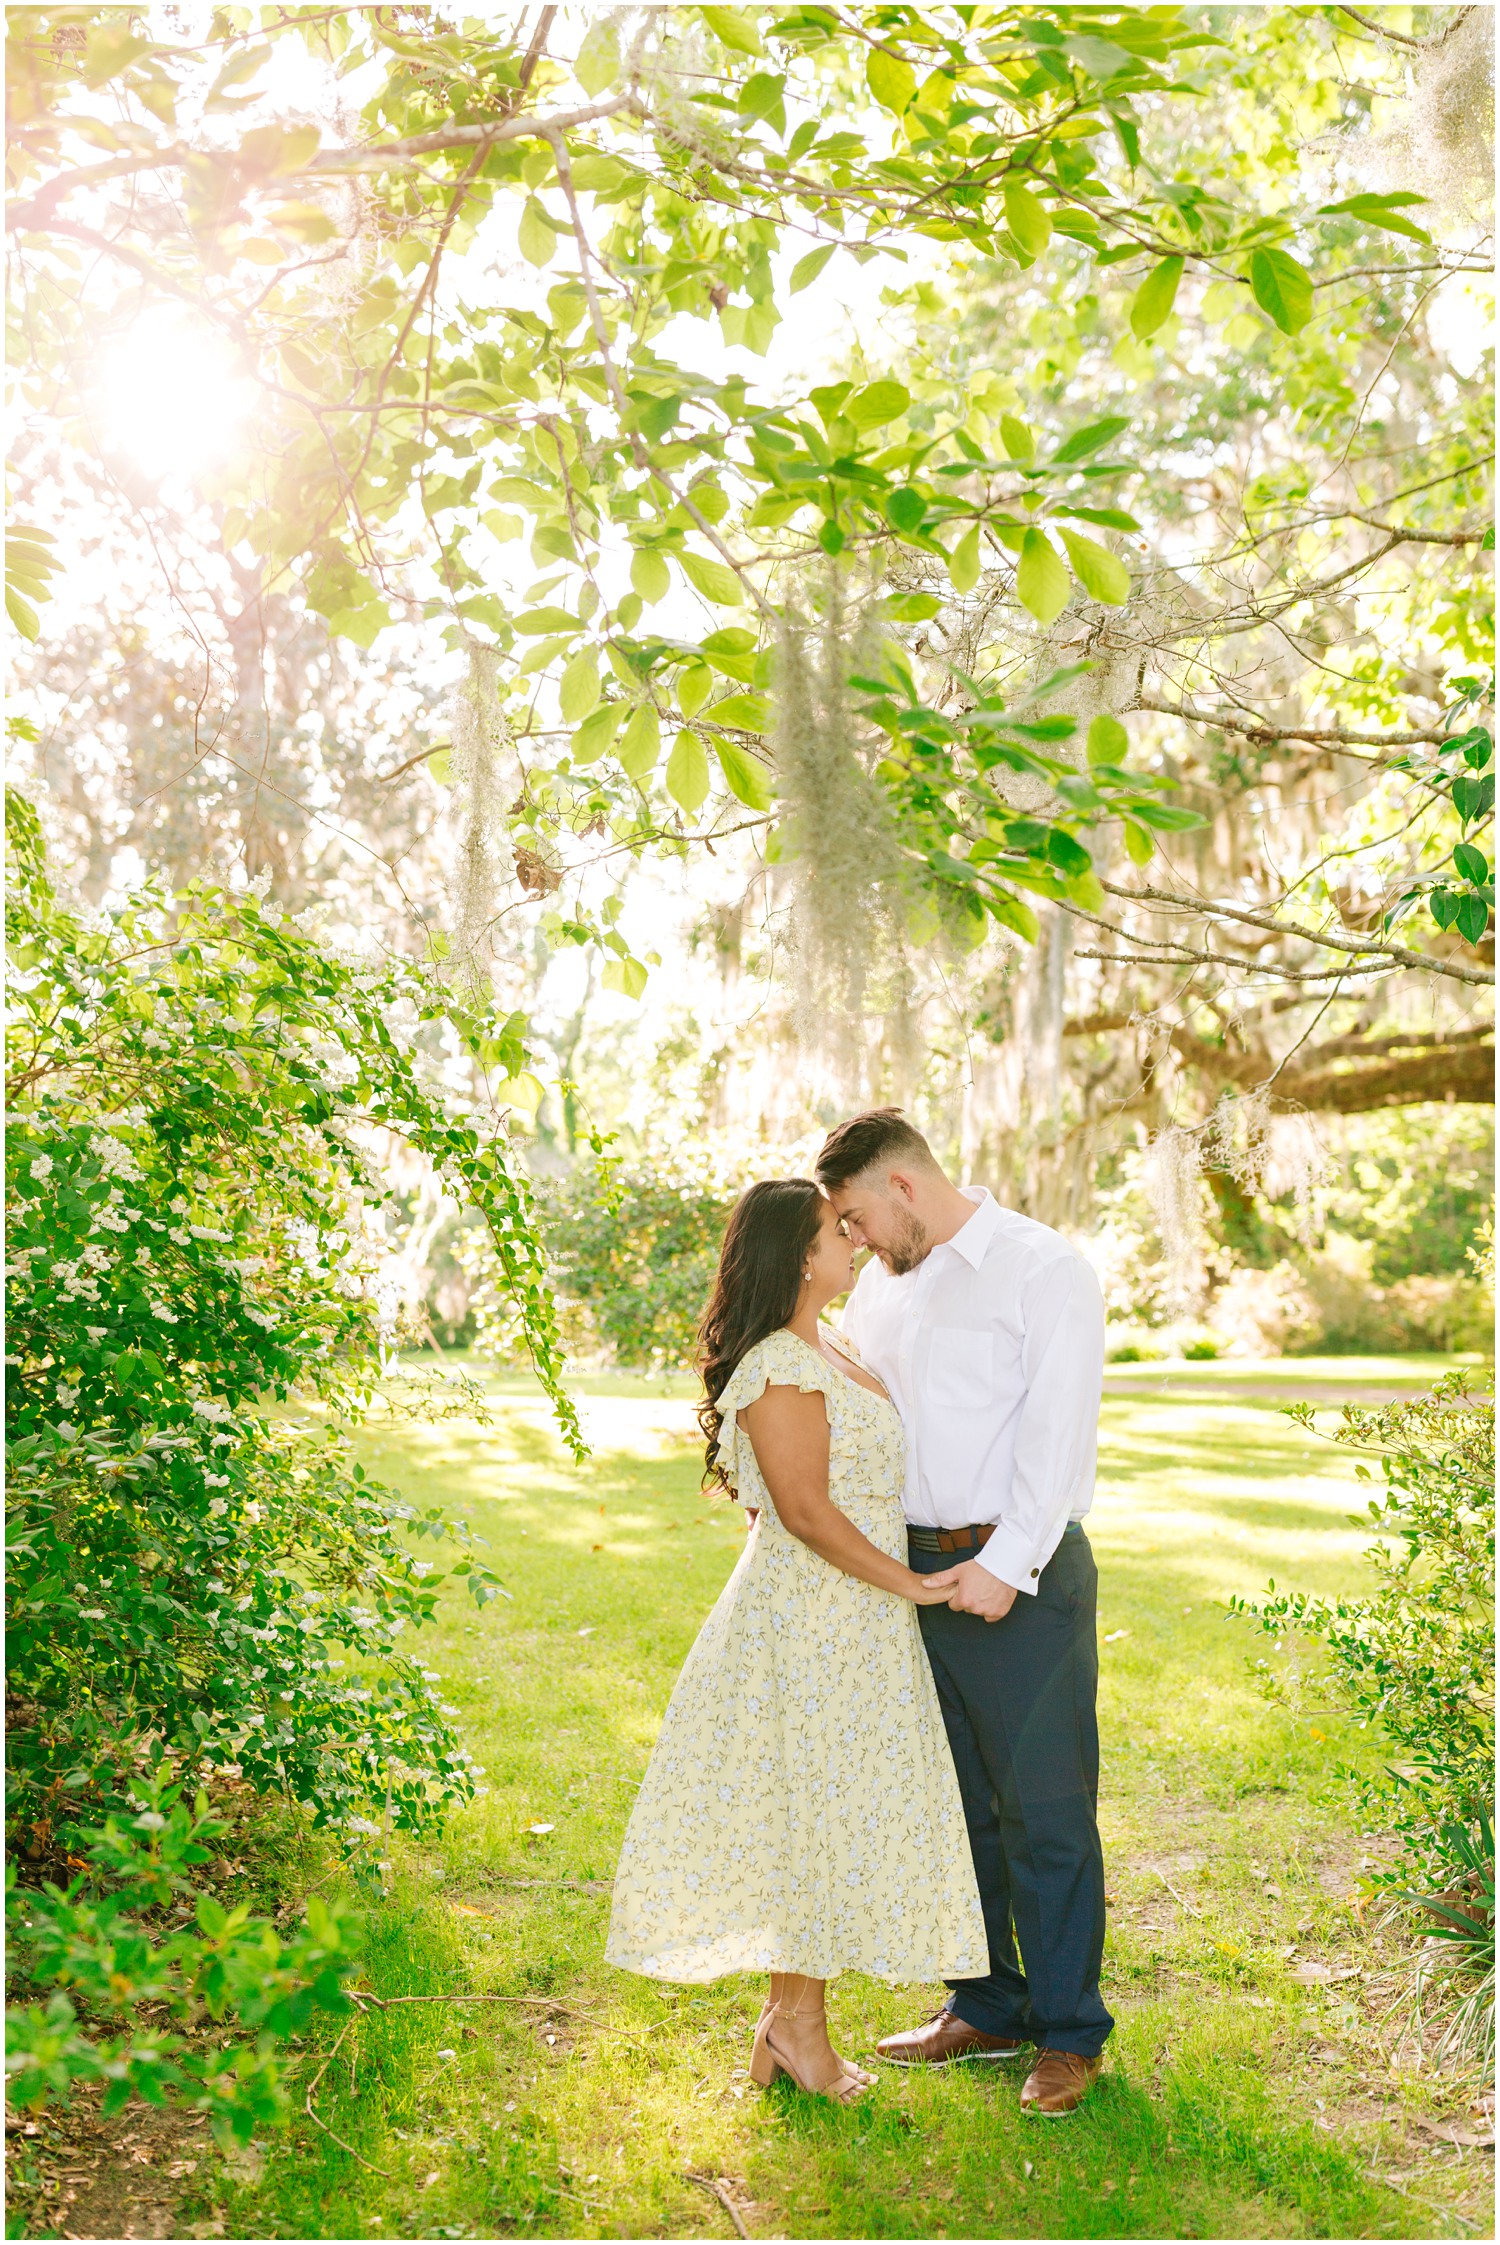 Destination-Wedding-Photographer_Magnolia-Plantation-Engagement-Session_Jess-and-Justin_Charleston-South-Carolina_0008.jpg